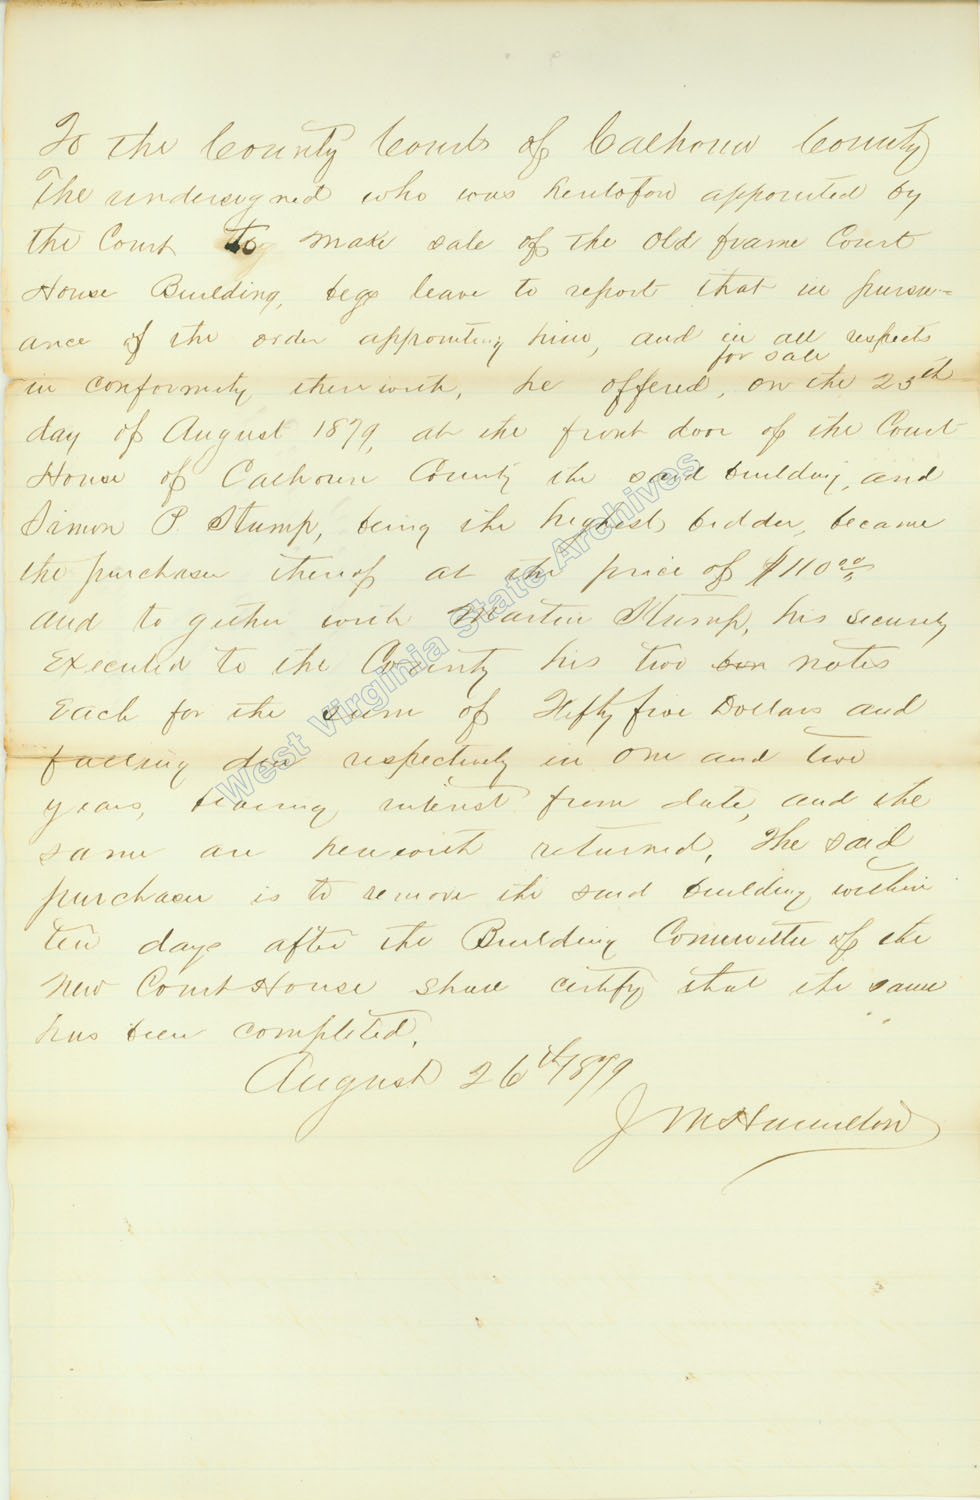 Purchase agreement between Calhoun County and Simon P. Stump for the old Calhoun Courthouse, 1879. (Ar2054)